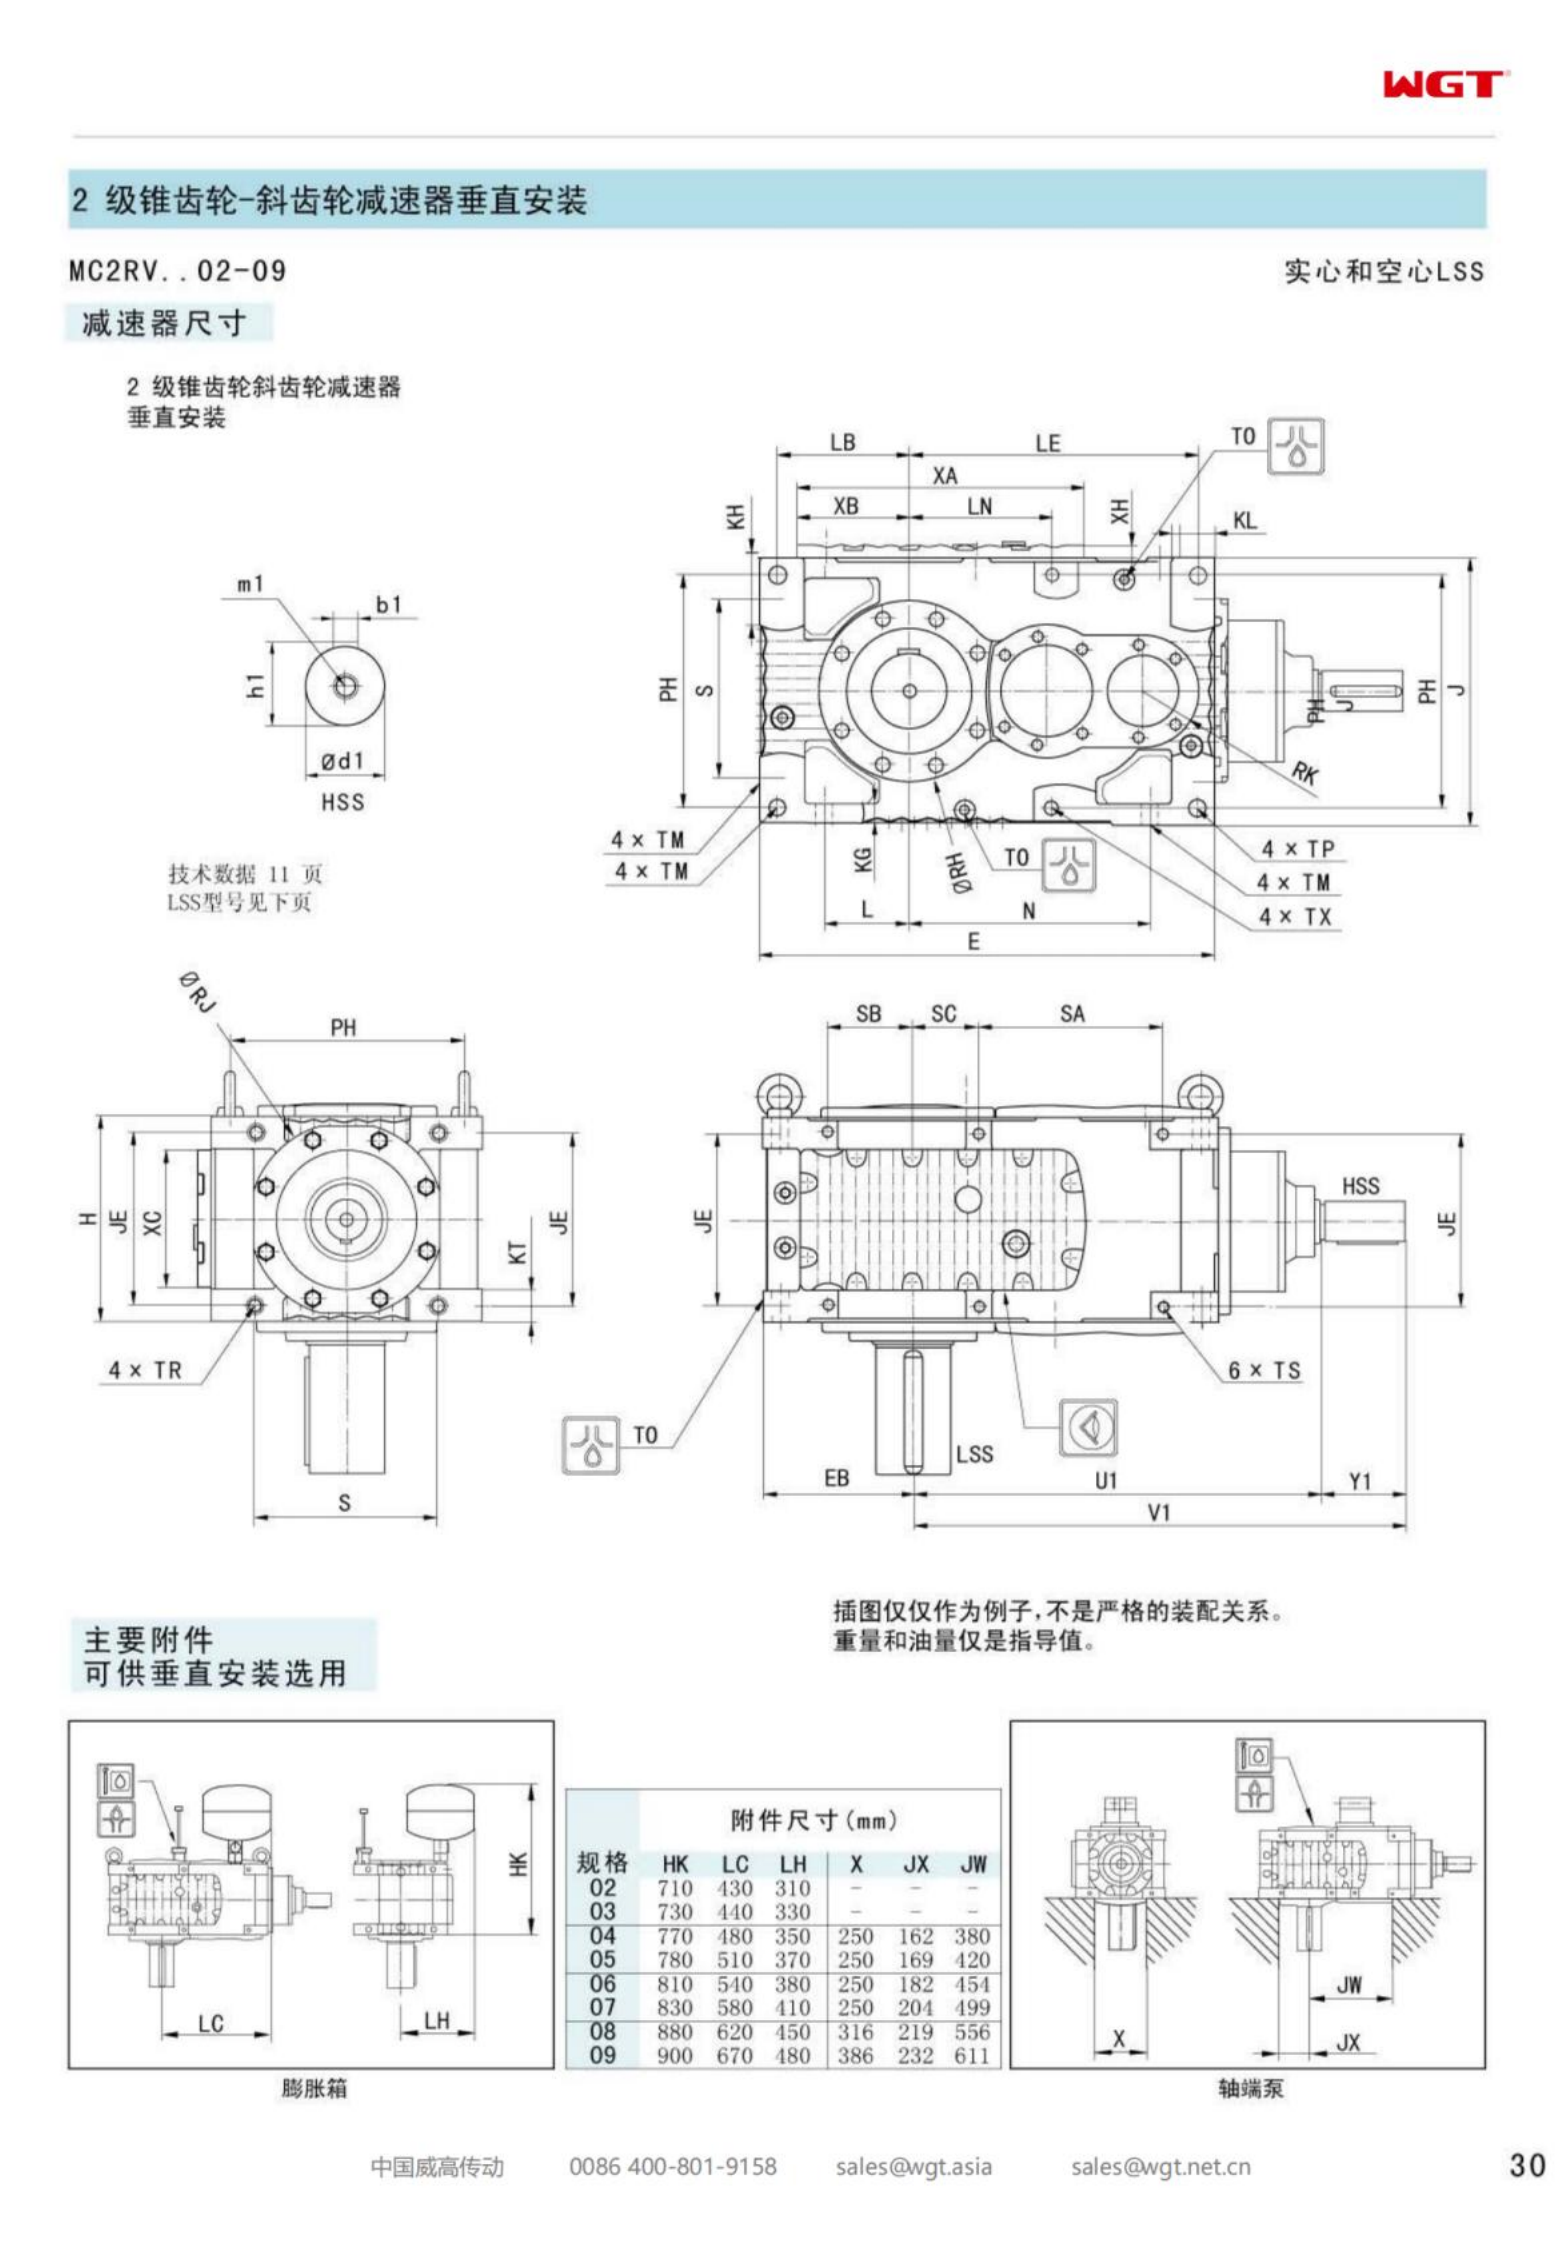 MC2RVST06 replaces _SEW_MC_Series gearbox (patent)